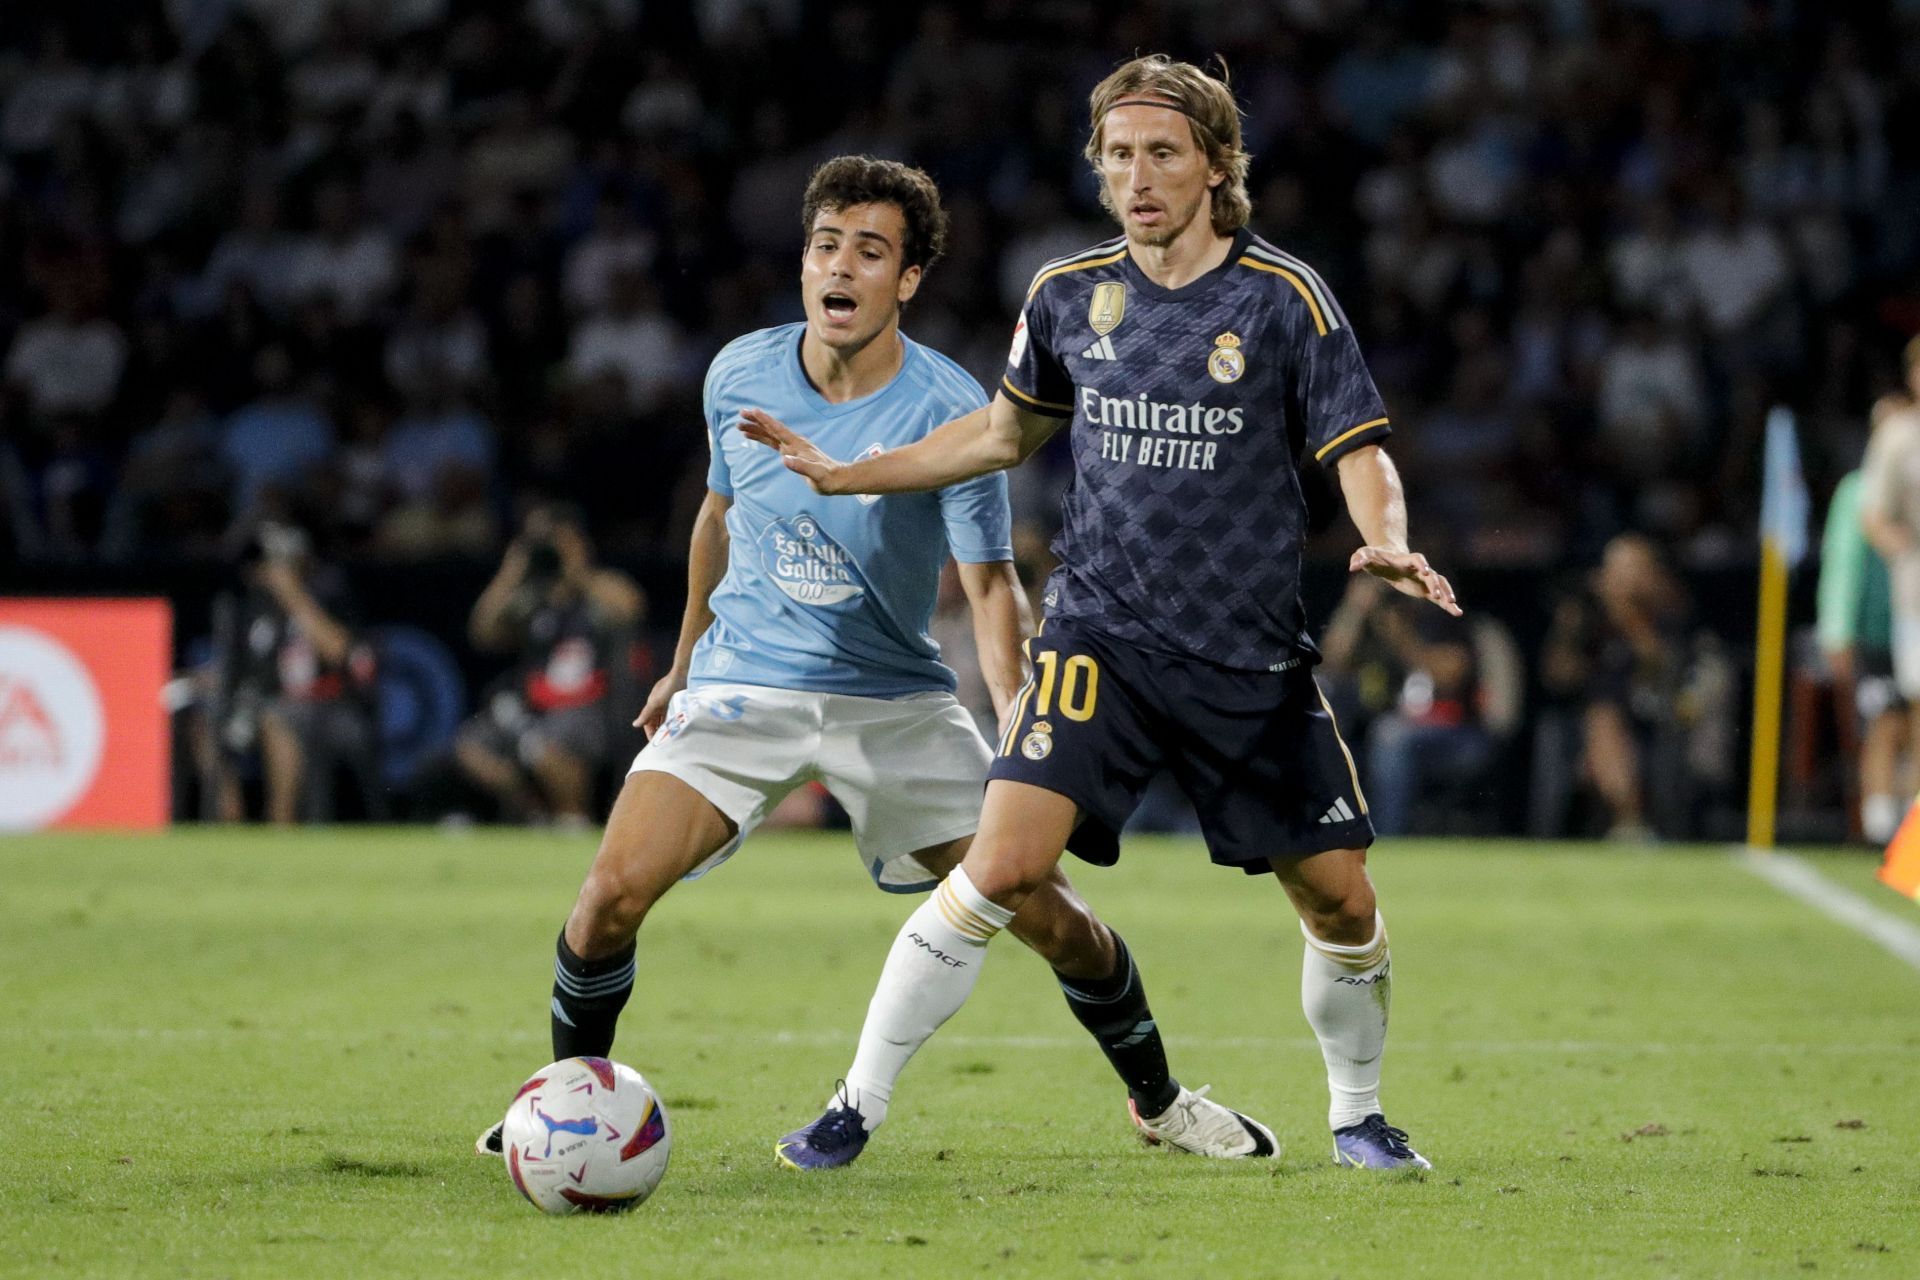 Modric (right) has had a stellar career at Real Madrid.